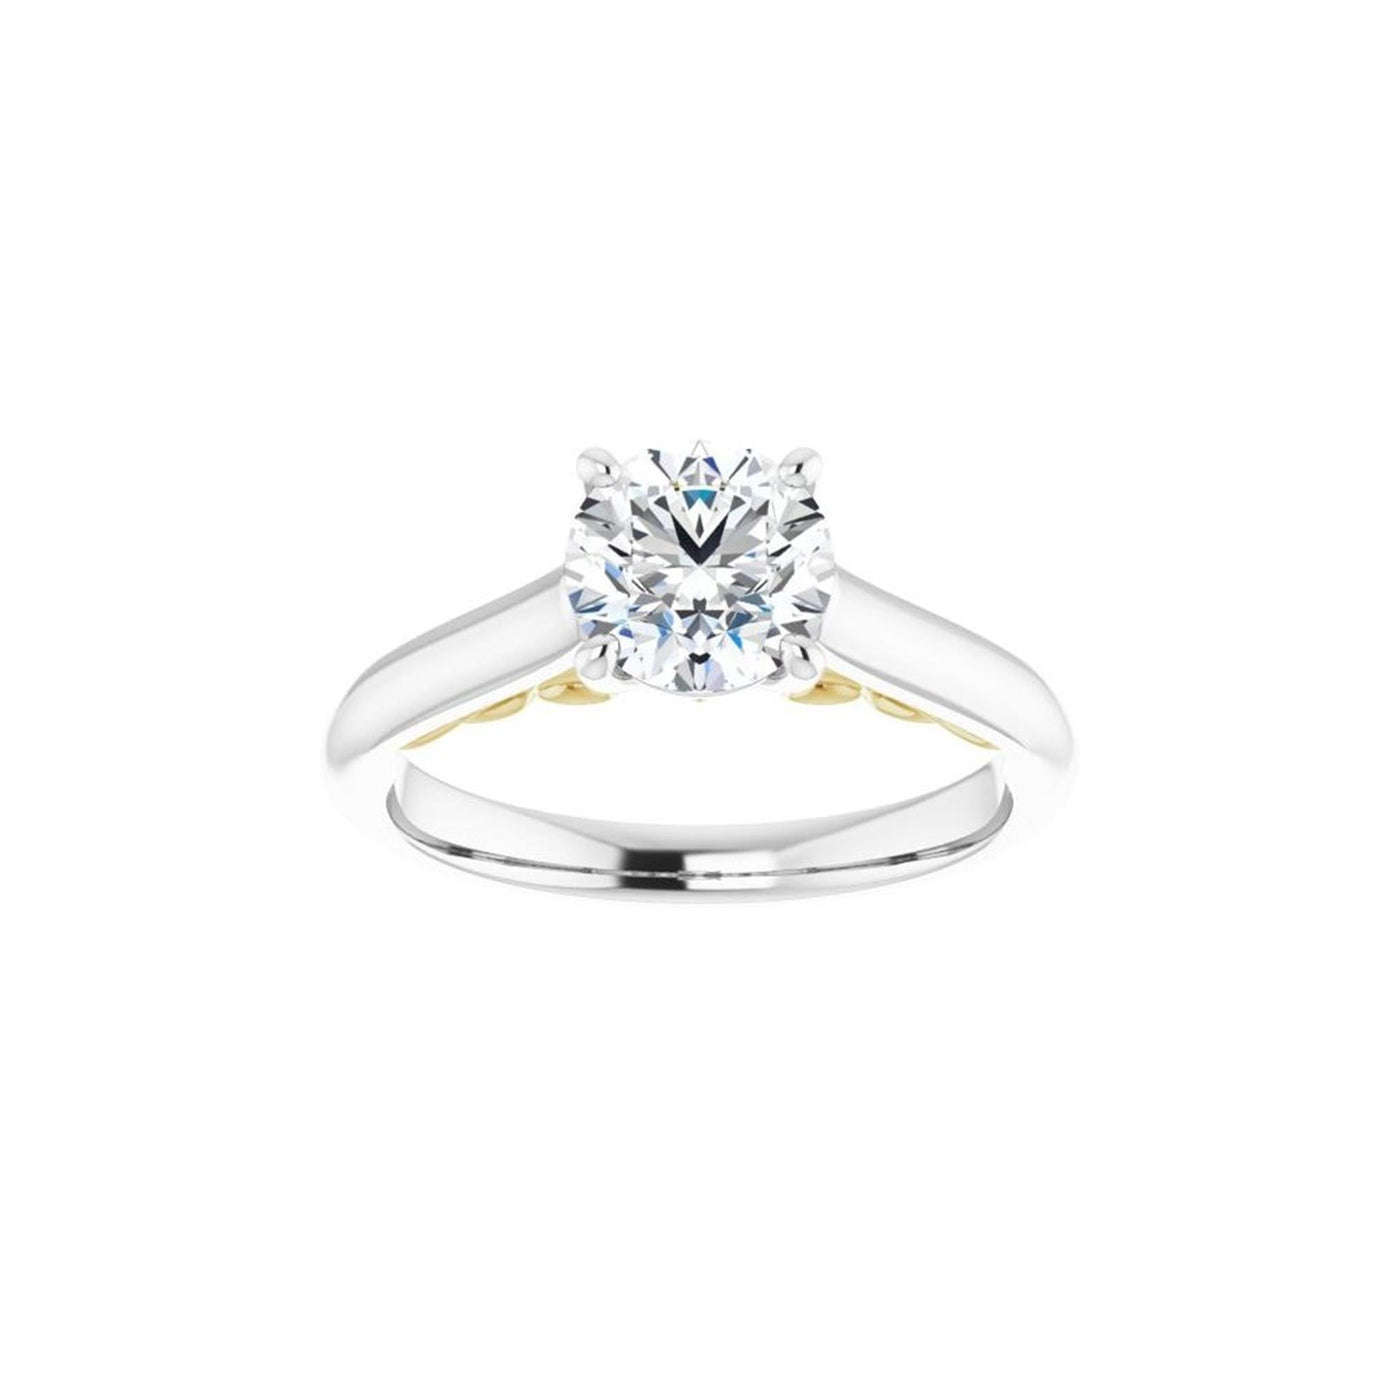 14K White Gold 4 Prong Style Diamond Semi-Mount Engagement Ring